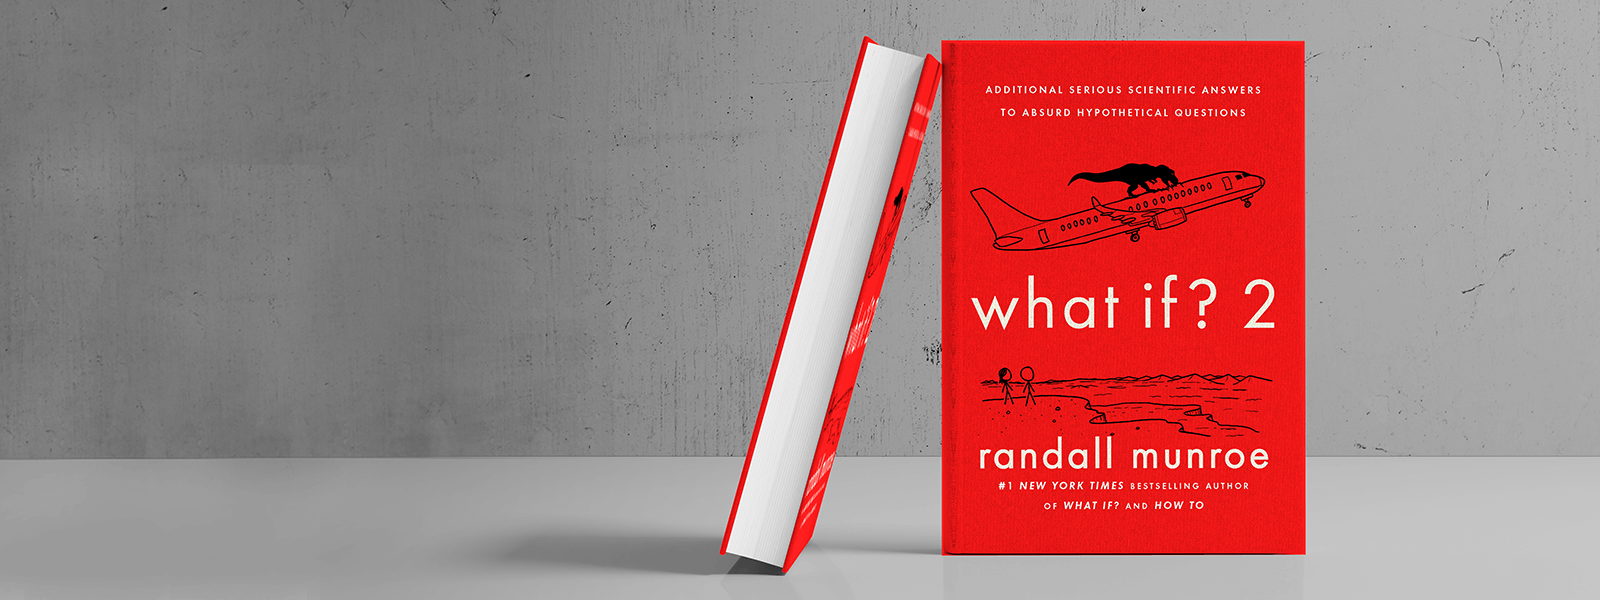 książka What if 2 Randalla Munroe na szarym betonowym tle